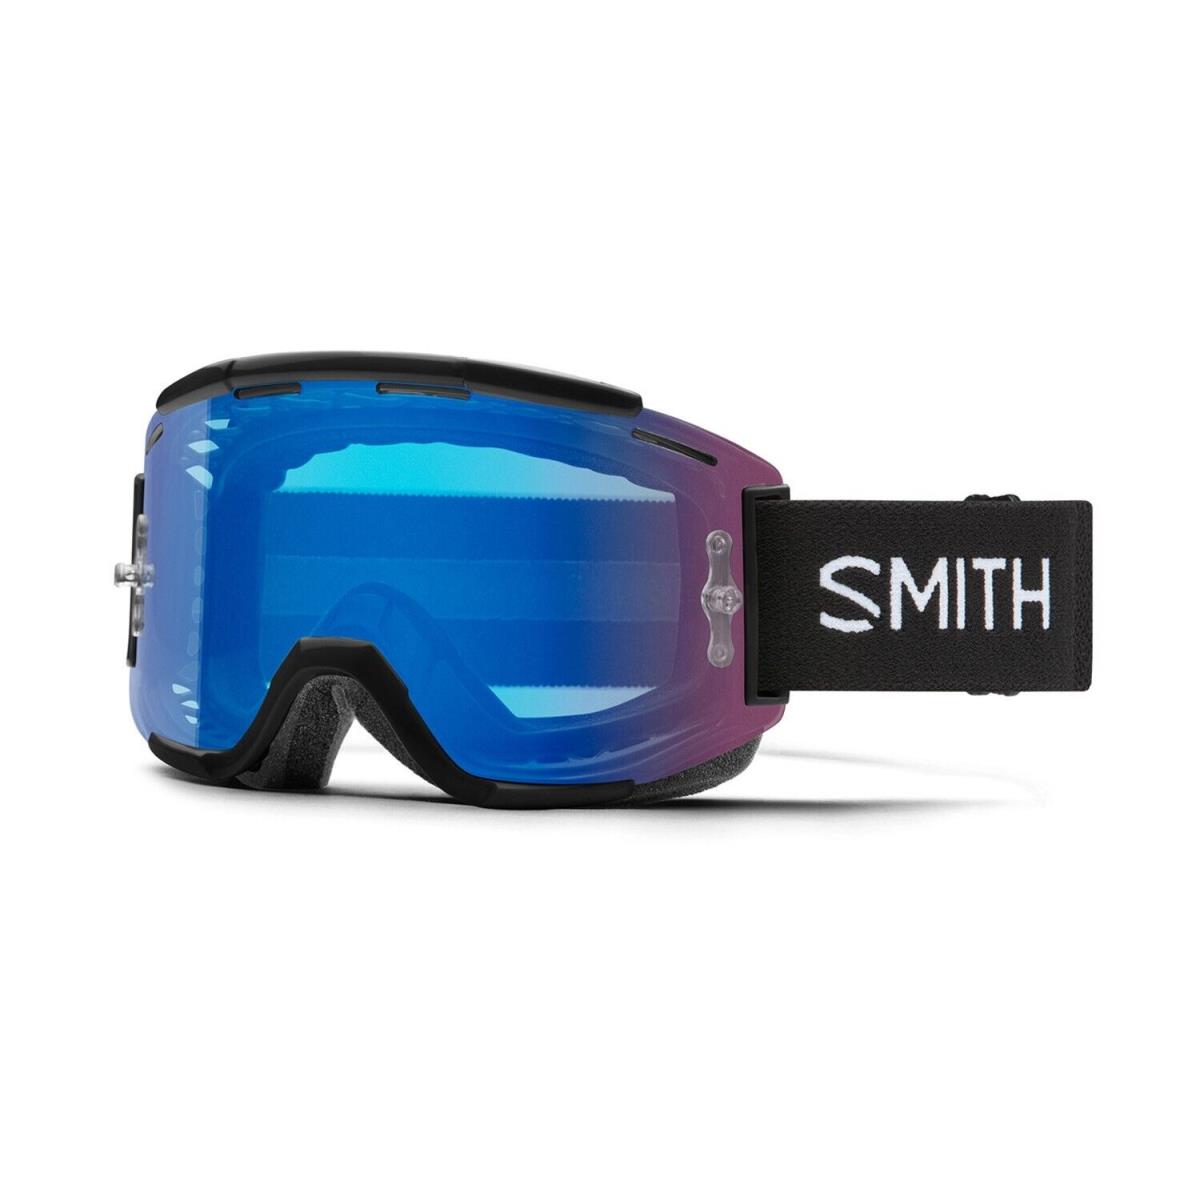 Smith Squad Mtb / Bike Goggles Black Chromapop Contrast Rose + Bonus Lens